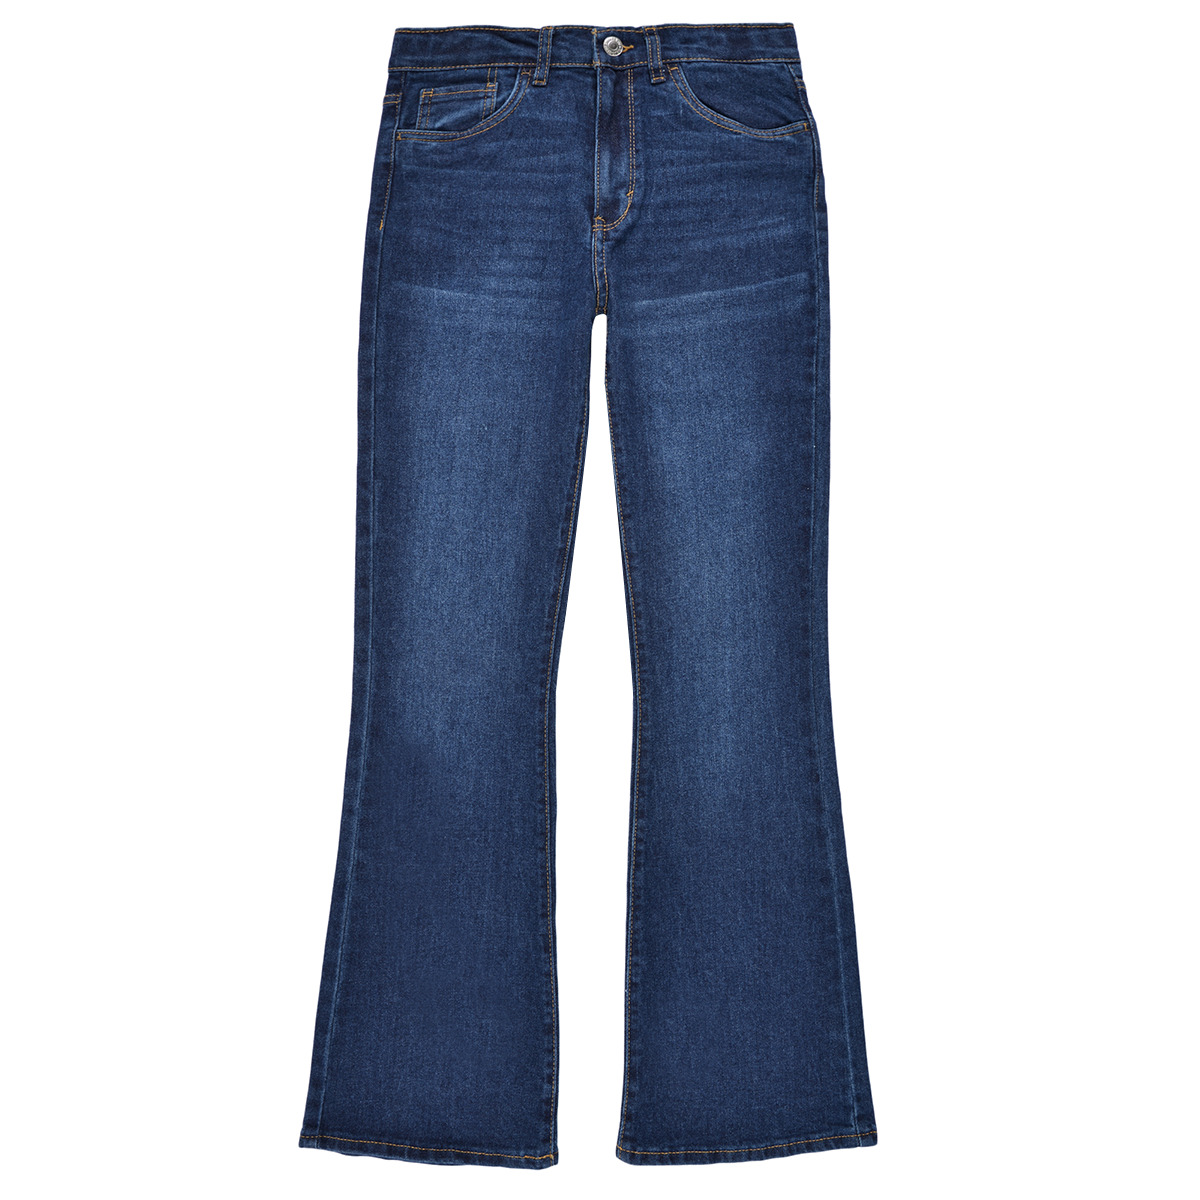 textil Pige Bootcut jeans Levi's HIGH RISE CROP FLARE Blå